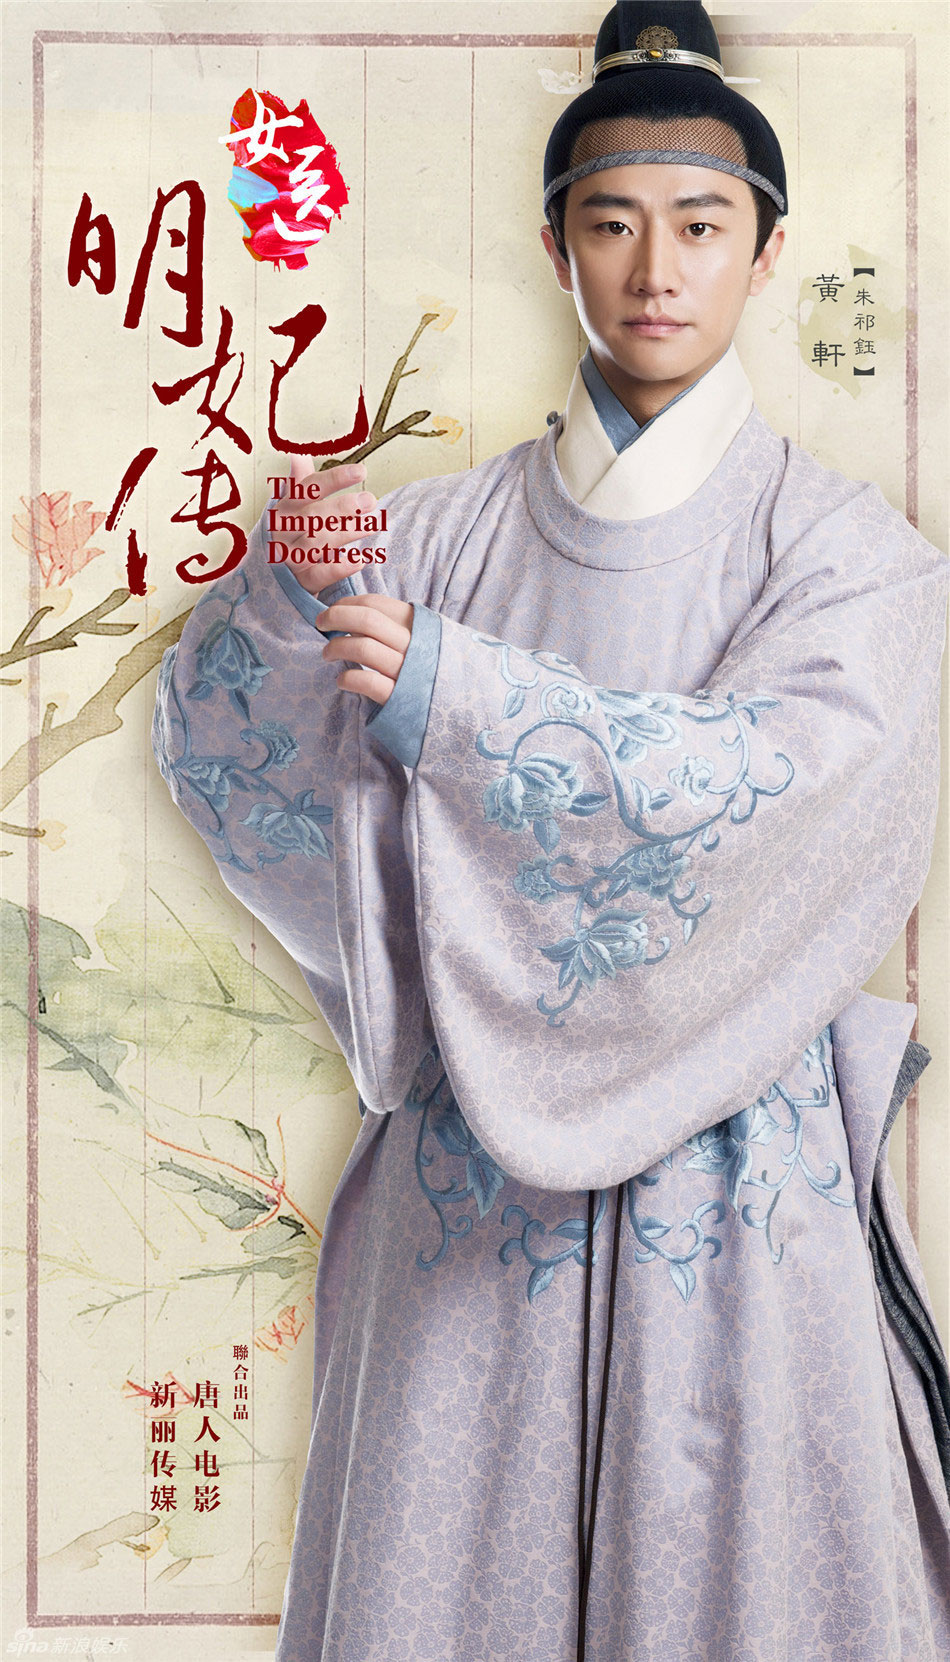 Huang Xuan Imperial Doctress Chinese drama